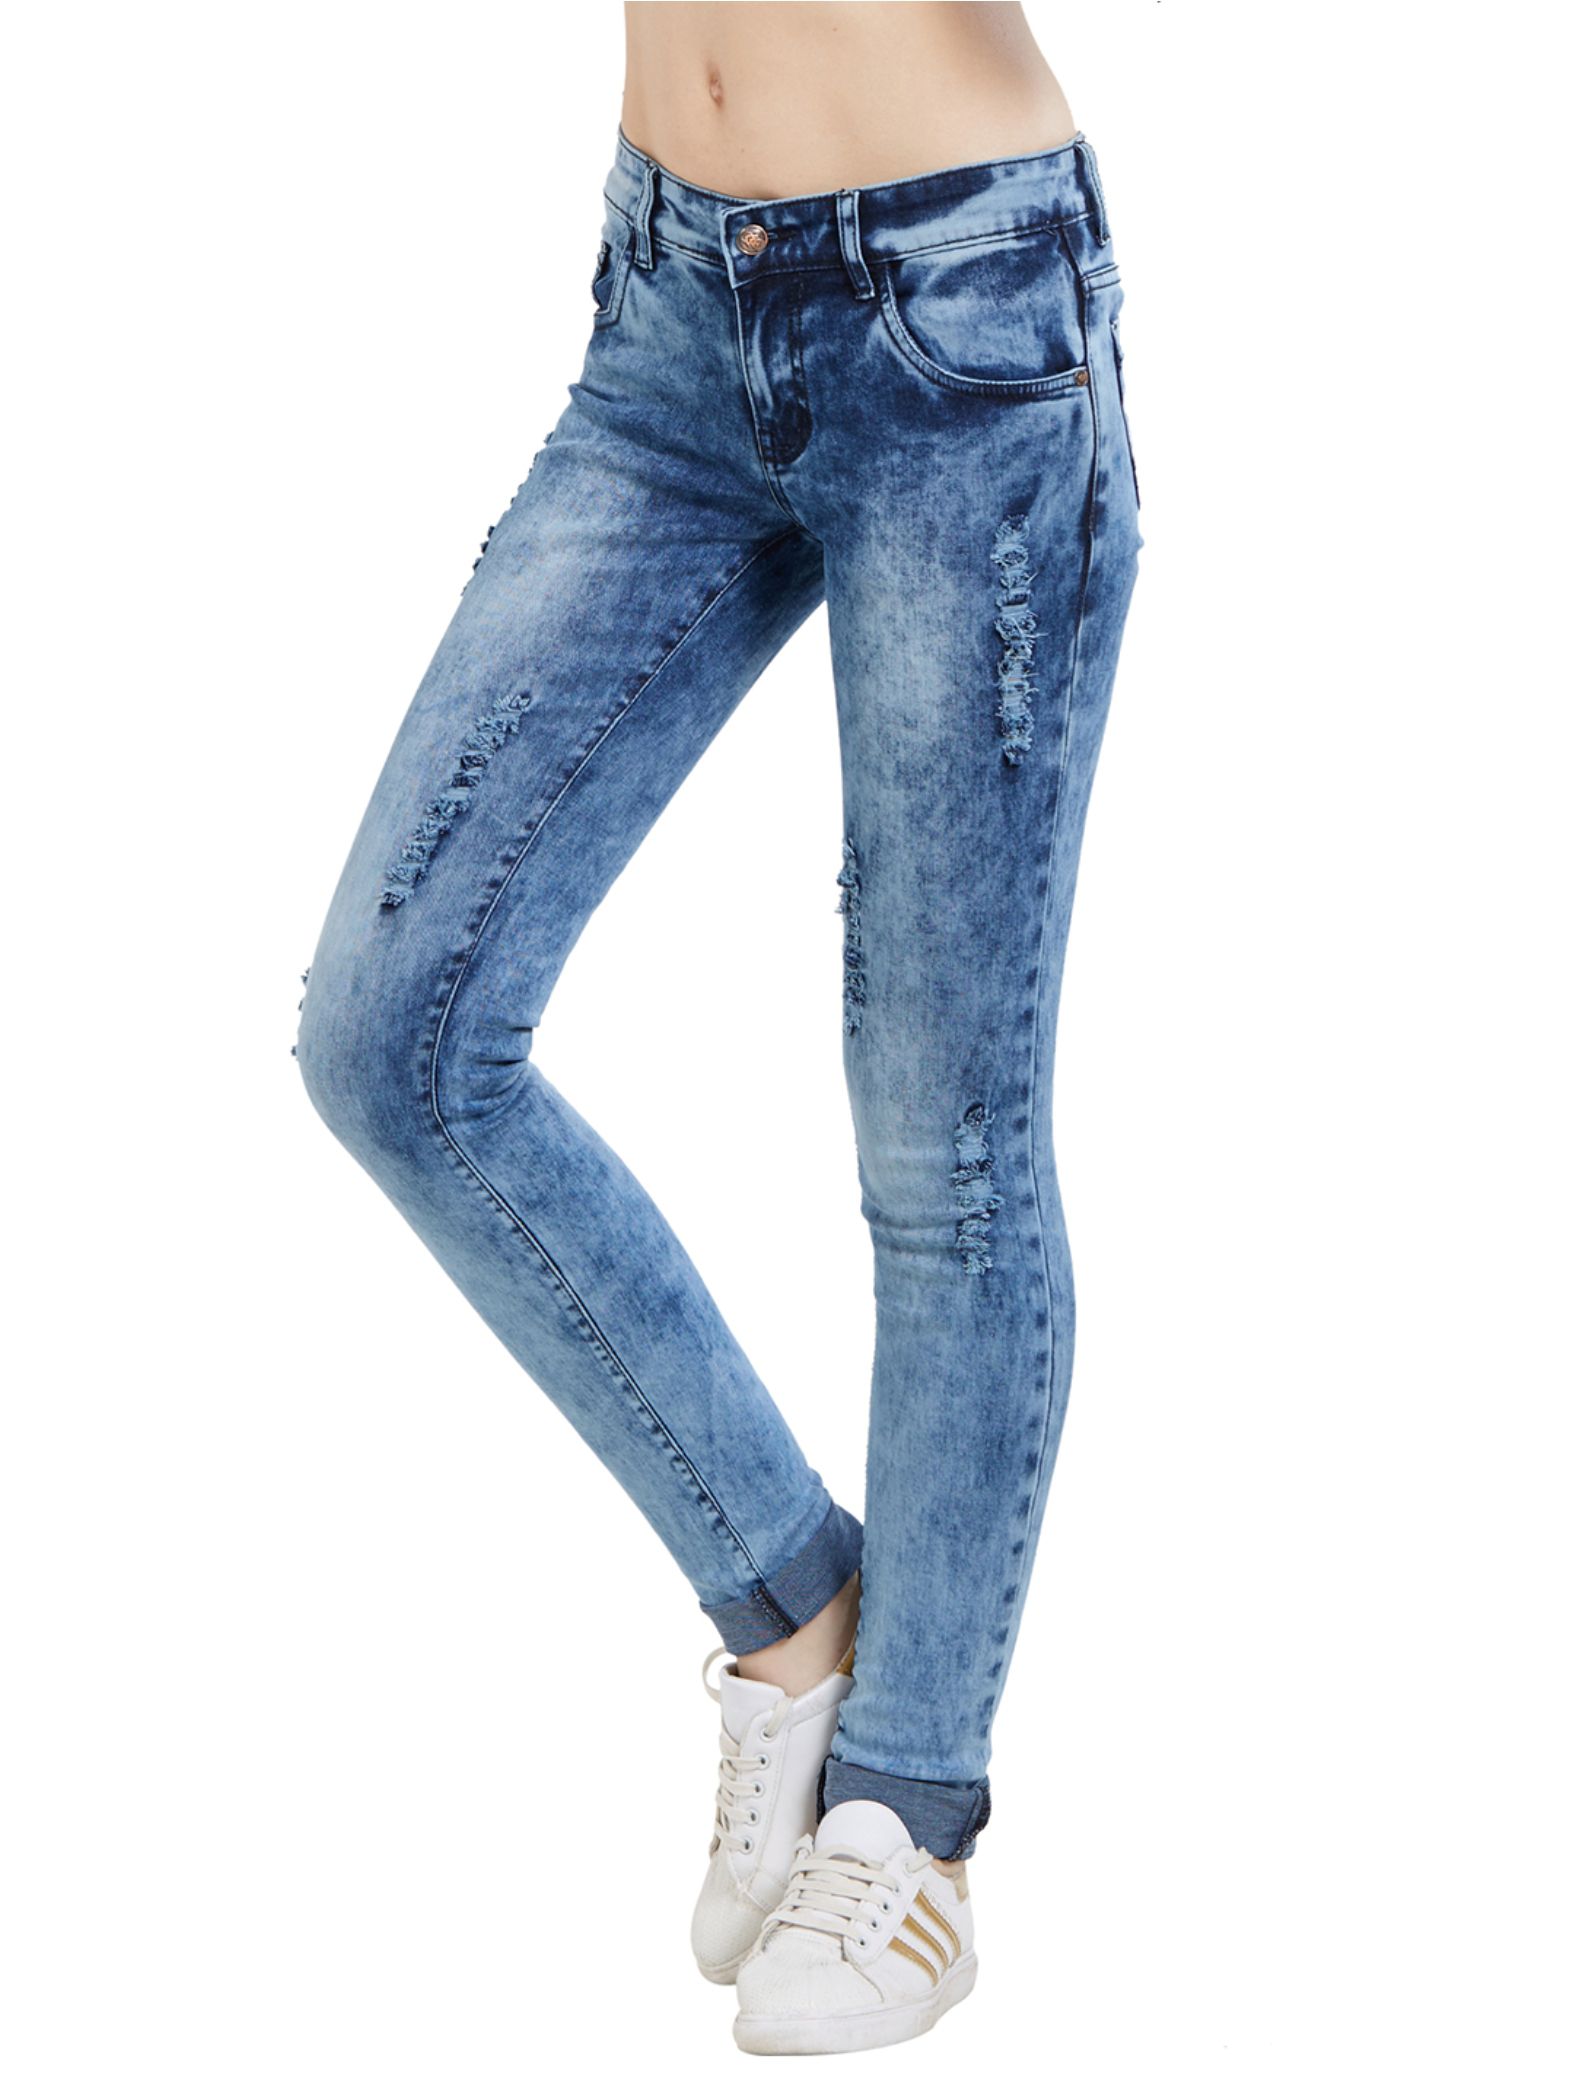 Blancz Denim Jeans - Blue - Buy Blancz Denim Jeans - Blue Online at ...